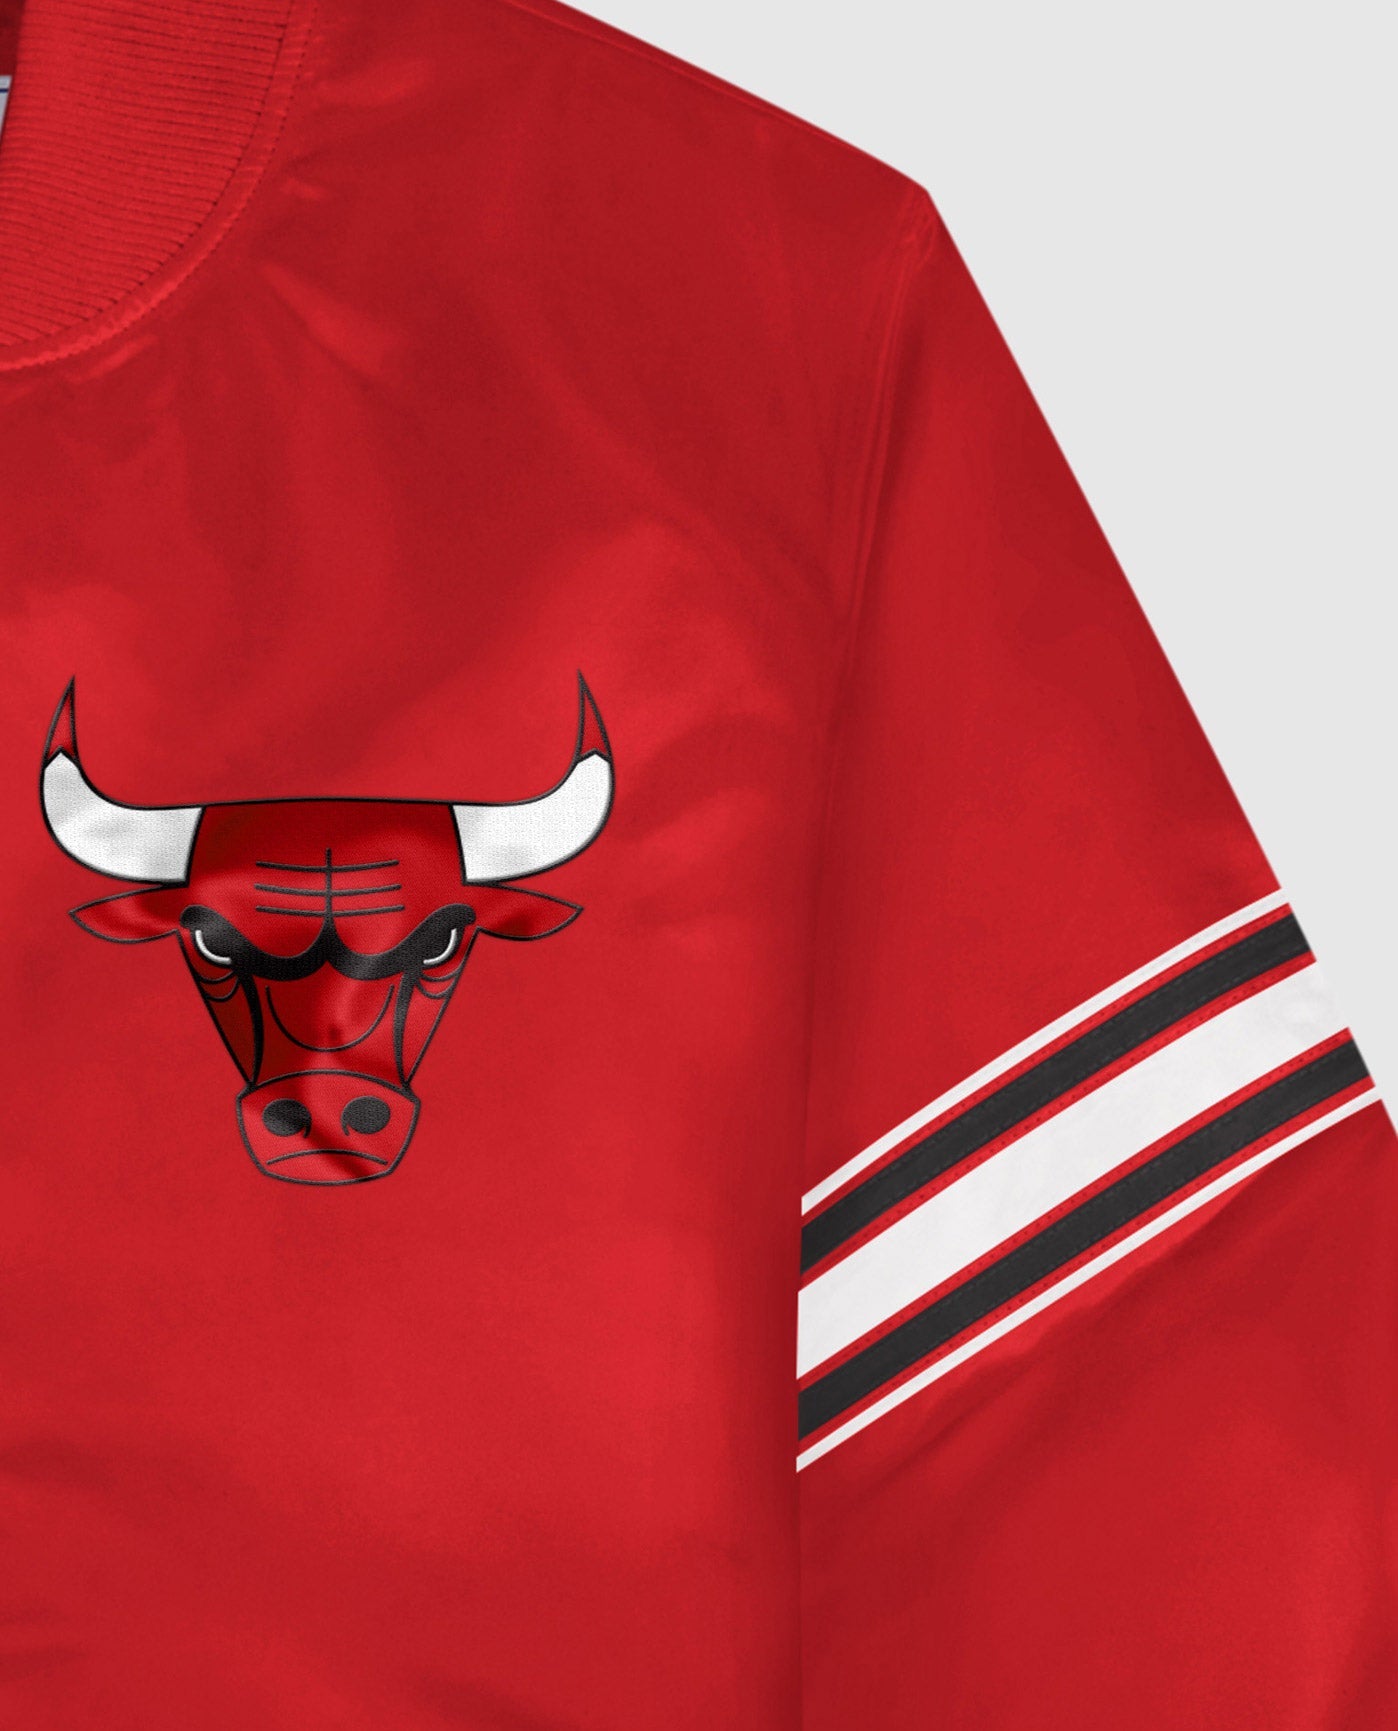 Starter Mens Chicago Bulls Jacket, Red, Large Other M